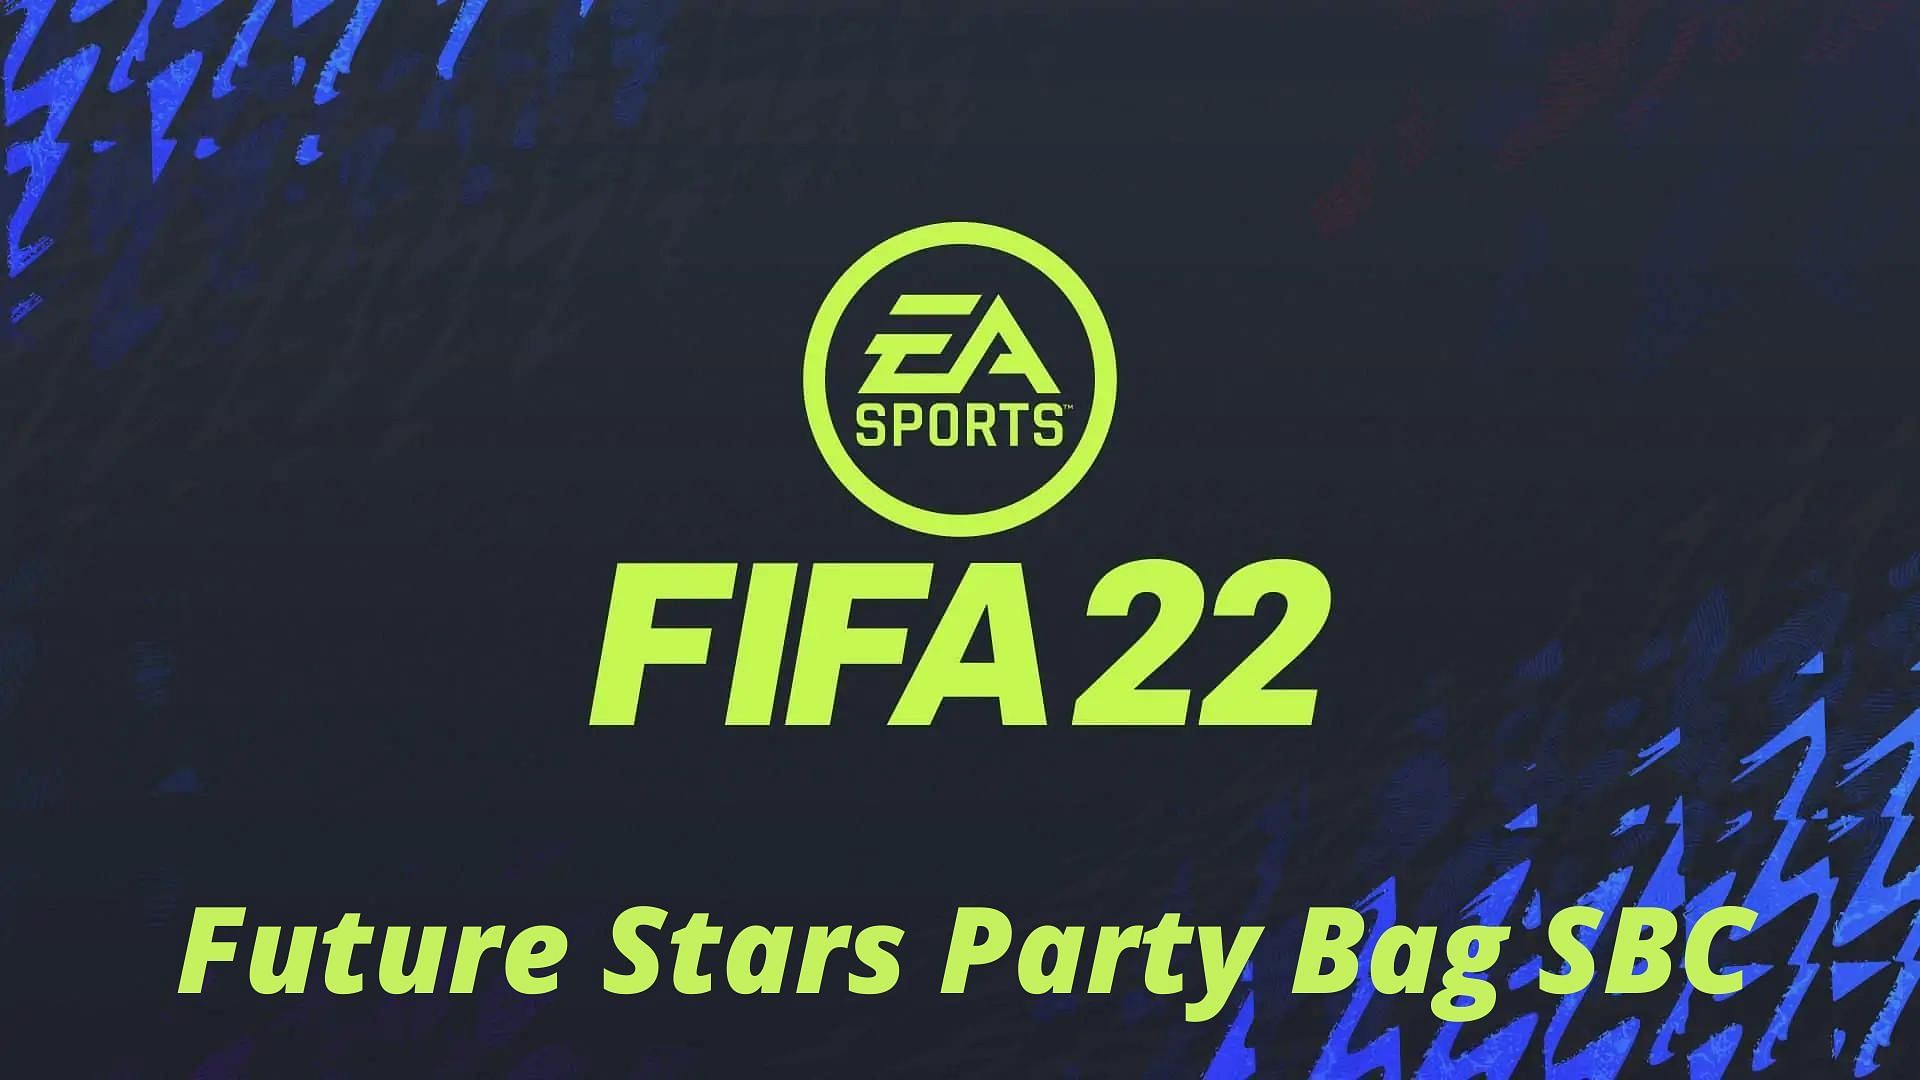 Future Stars Party Bag SBC is now live in FIFA 22 (Image via Sportskeeda)